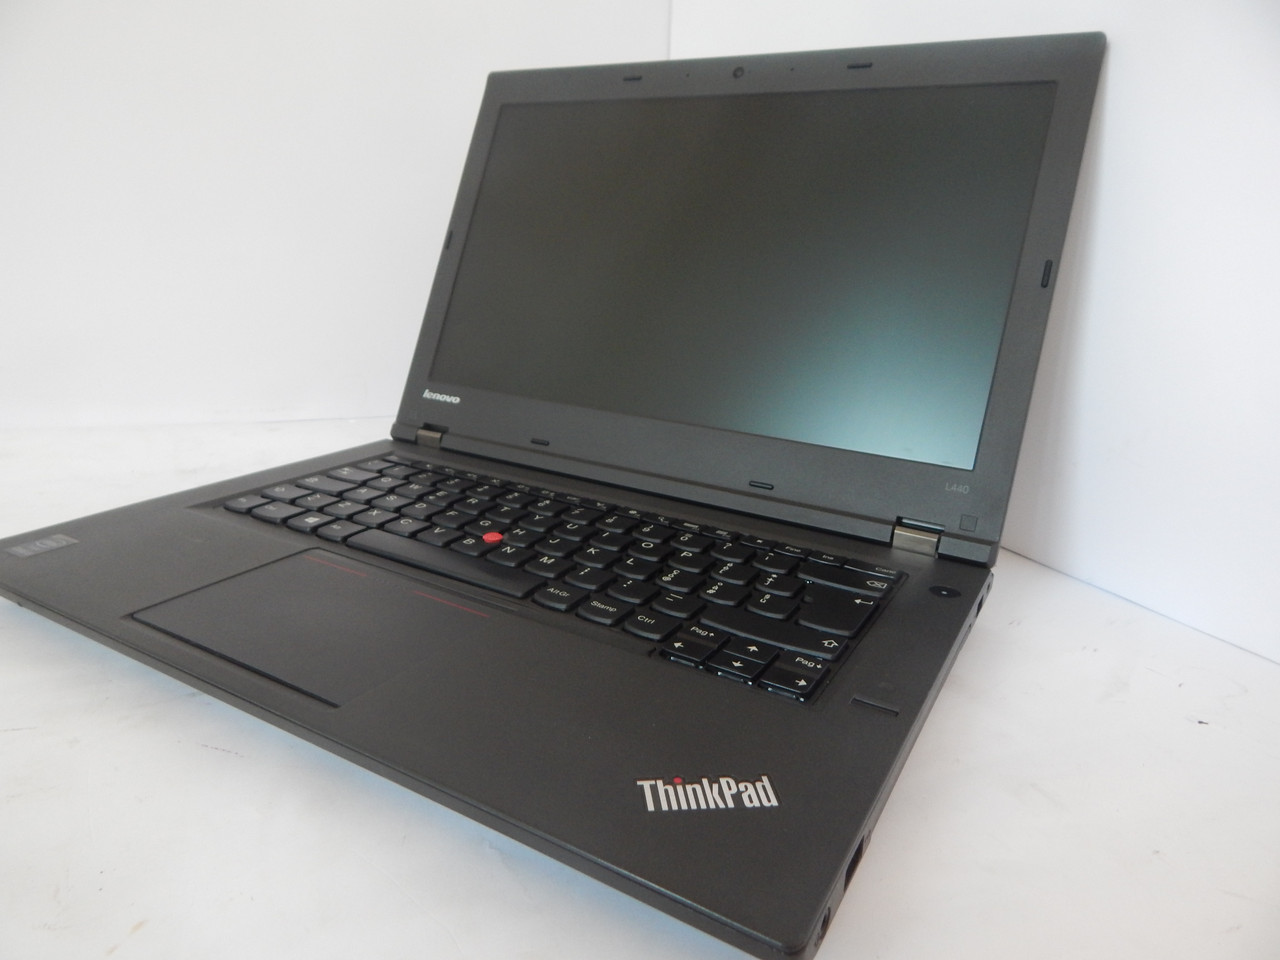 Ноутбук Lenovo ThinkPad i5-4300M 500 hdd 4 RAM usb 3.0Нет в наличии